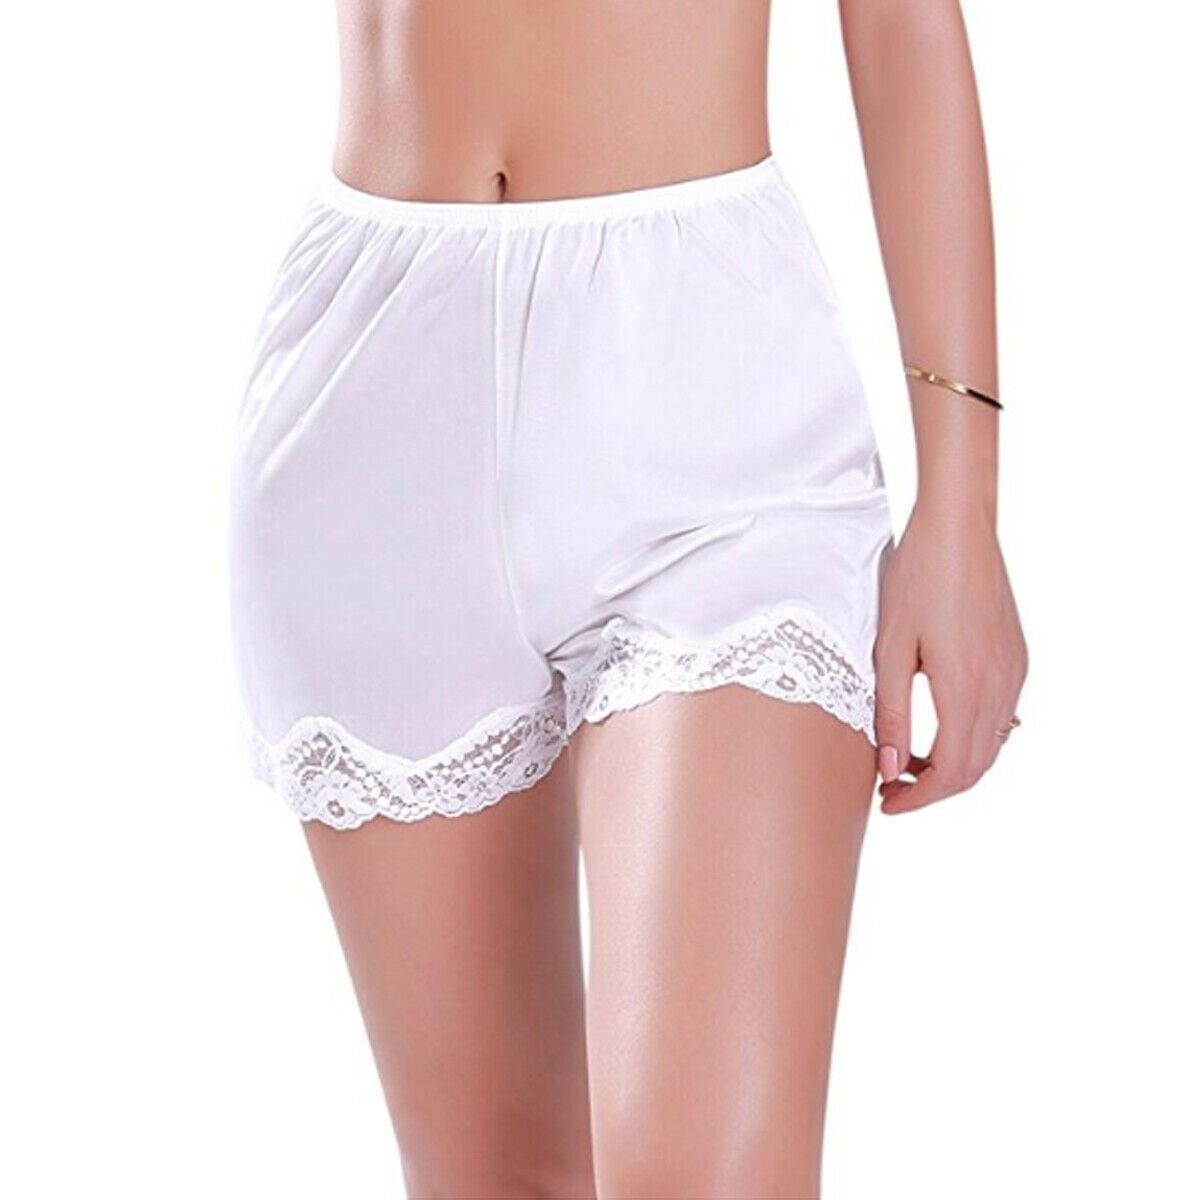 B2BODY Women's Panties Microfiber Silicone Edge Hipsters XS-3X Plus Size 